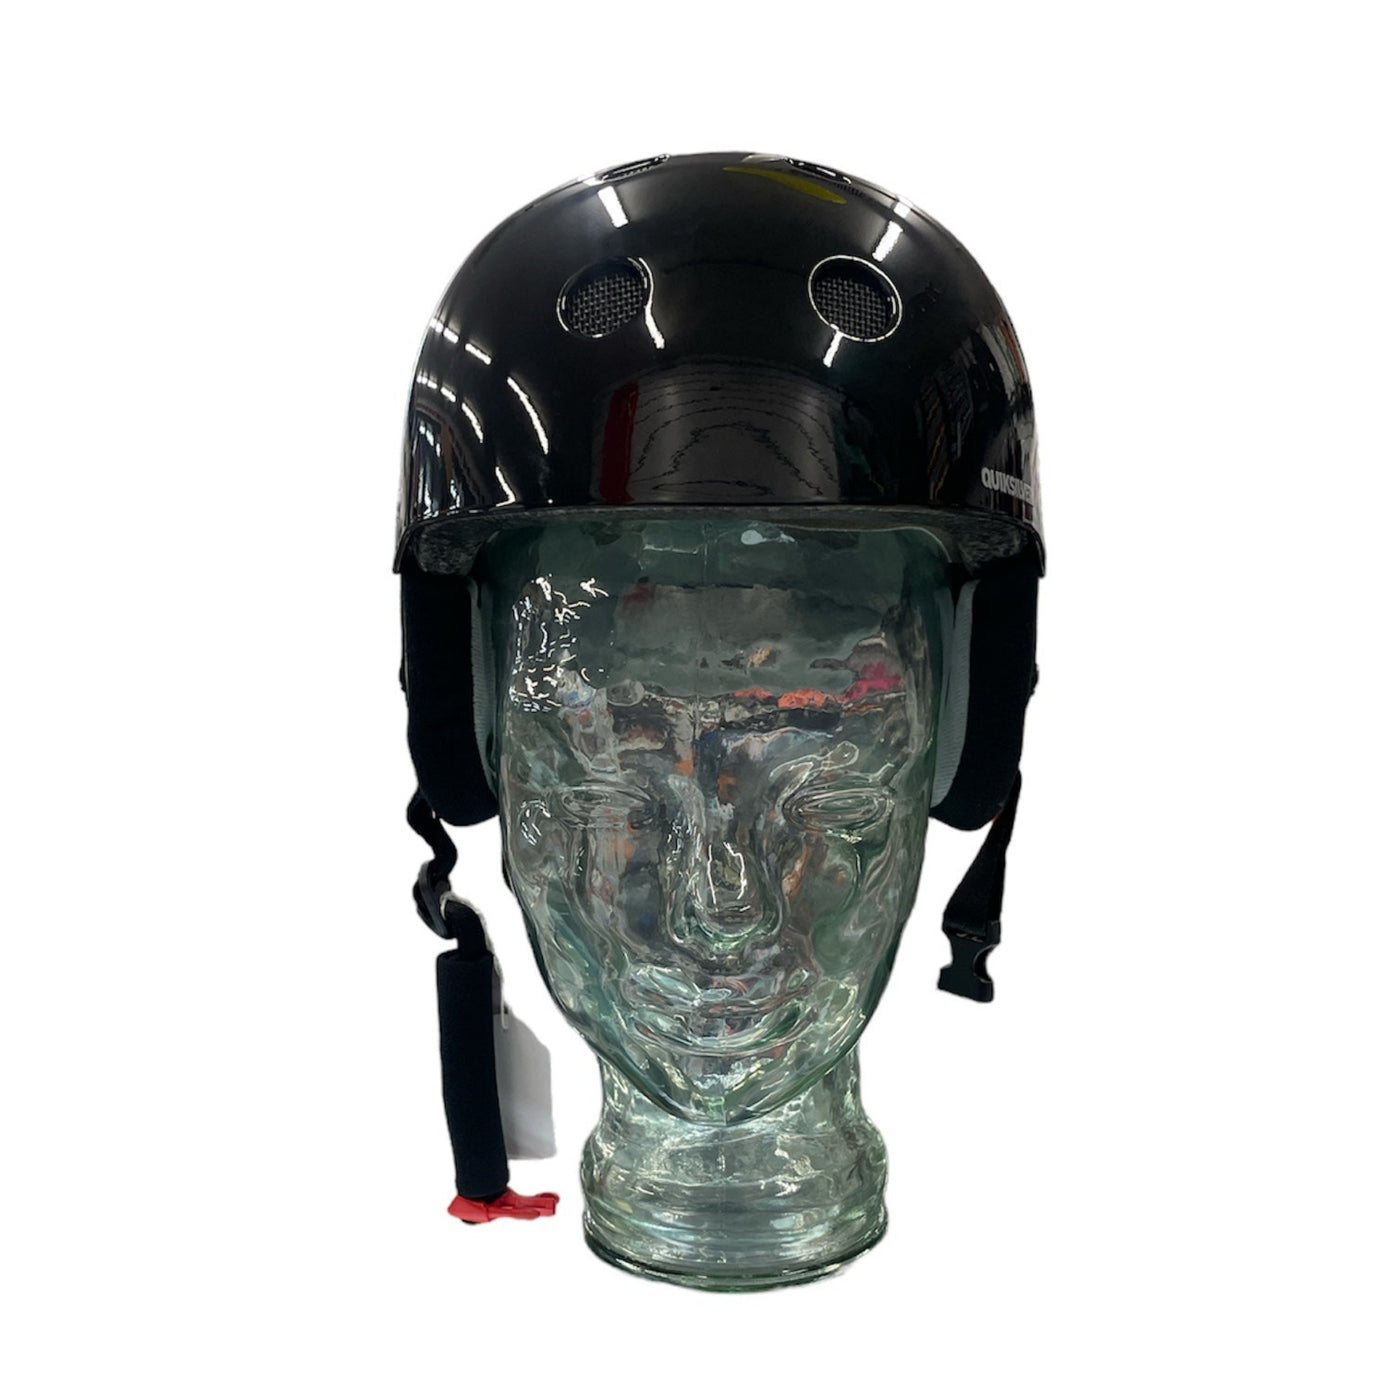 Quiksilver Onyx Youth Snow Helmet - Black